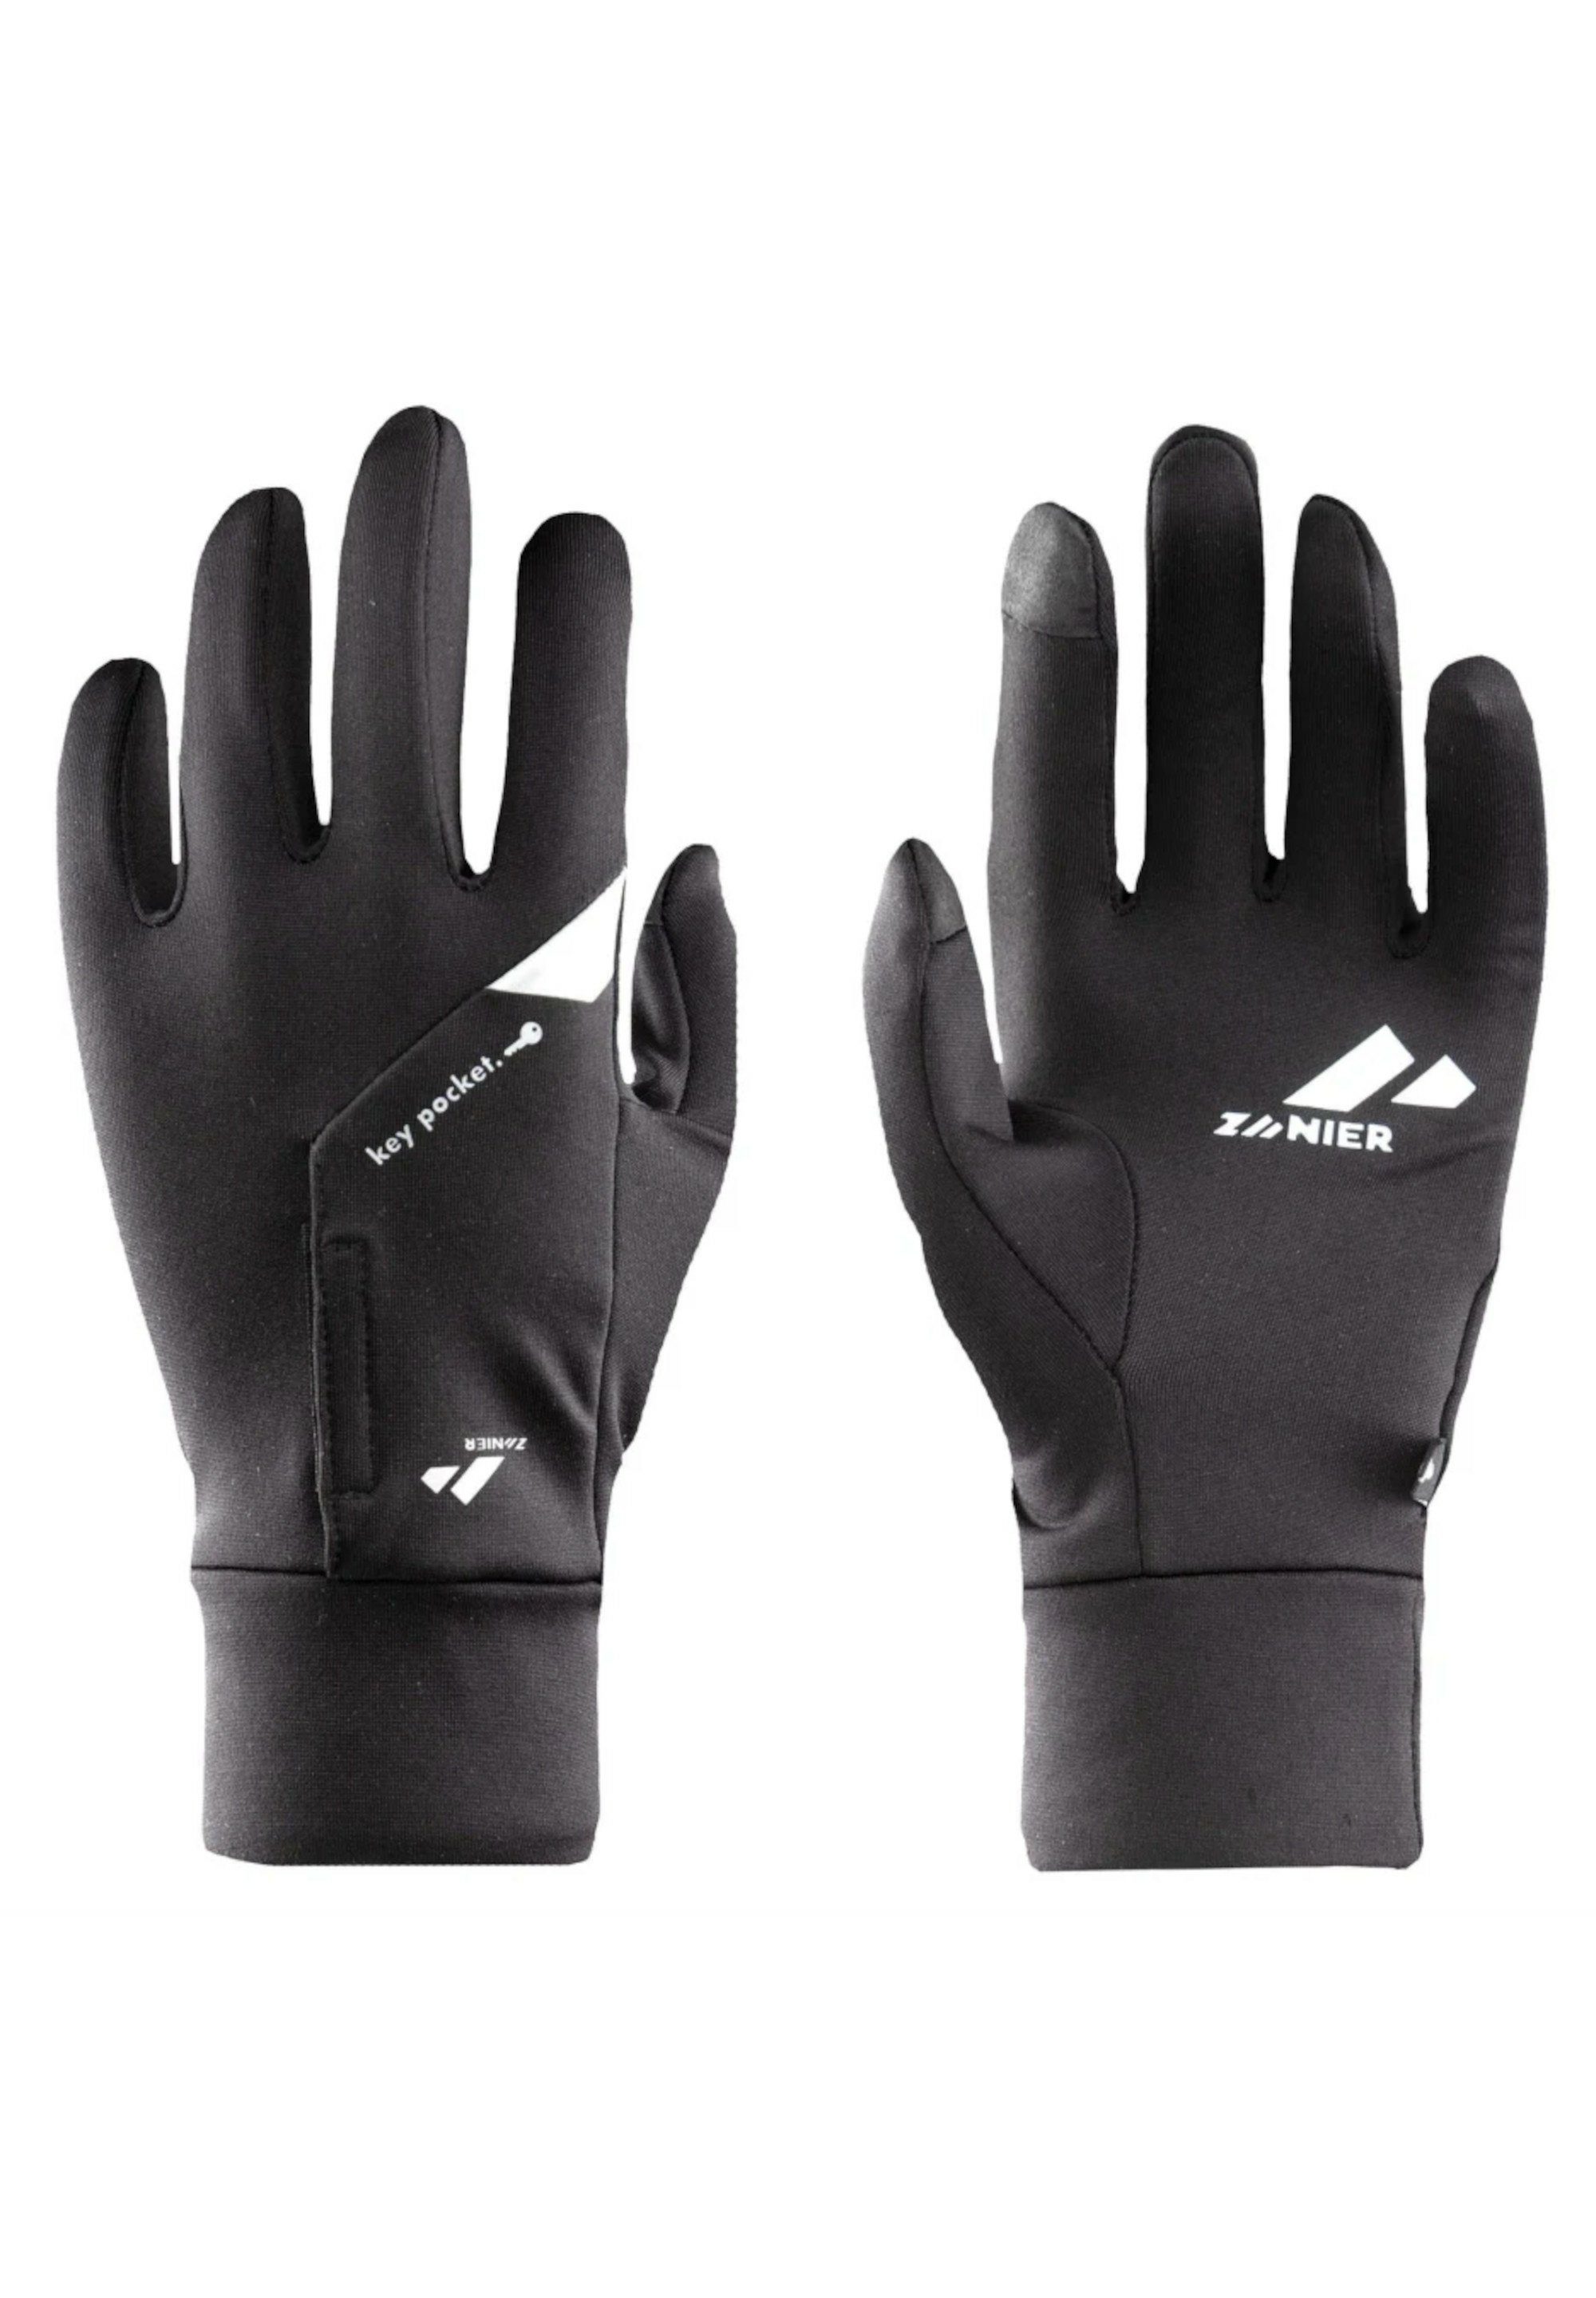 We ENDURANCE Zanier Multisporthandschuhe gloves on focus